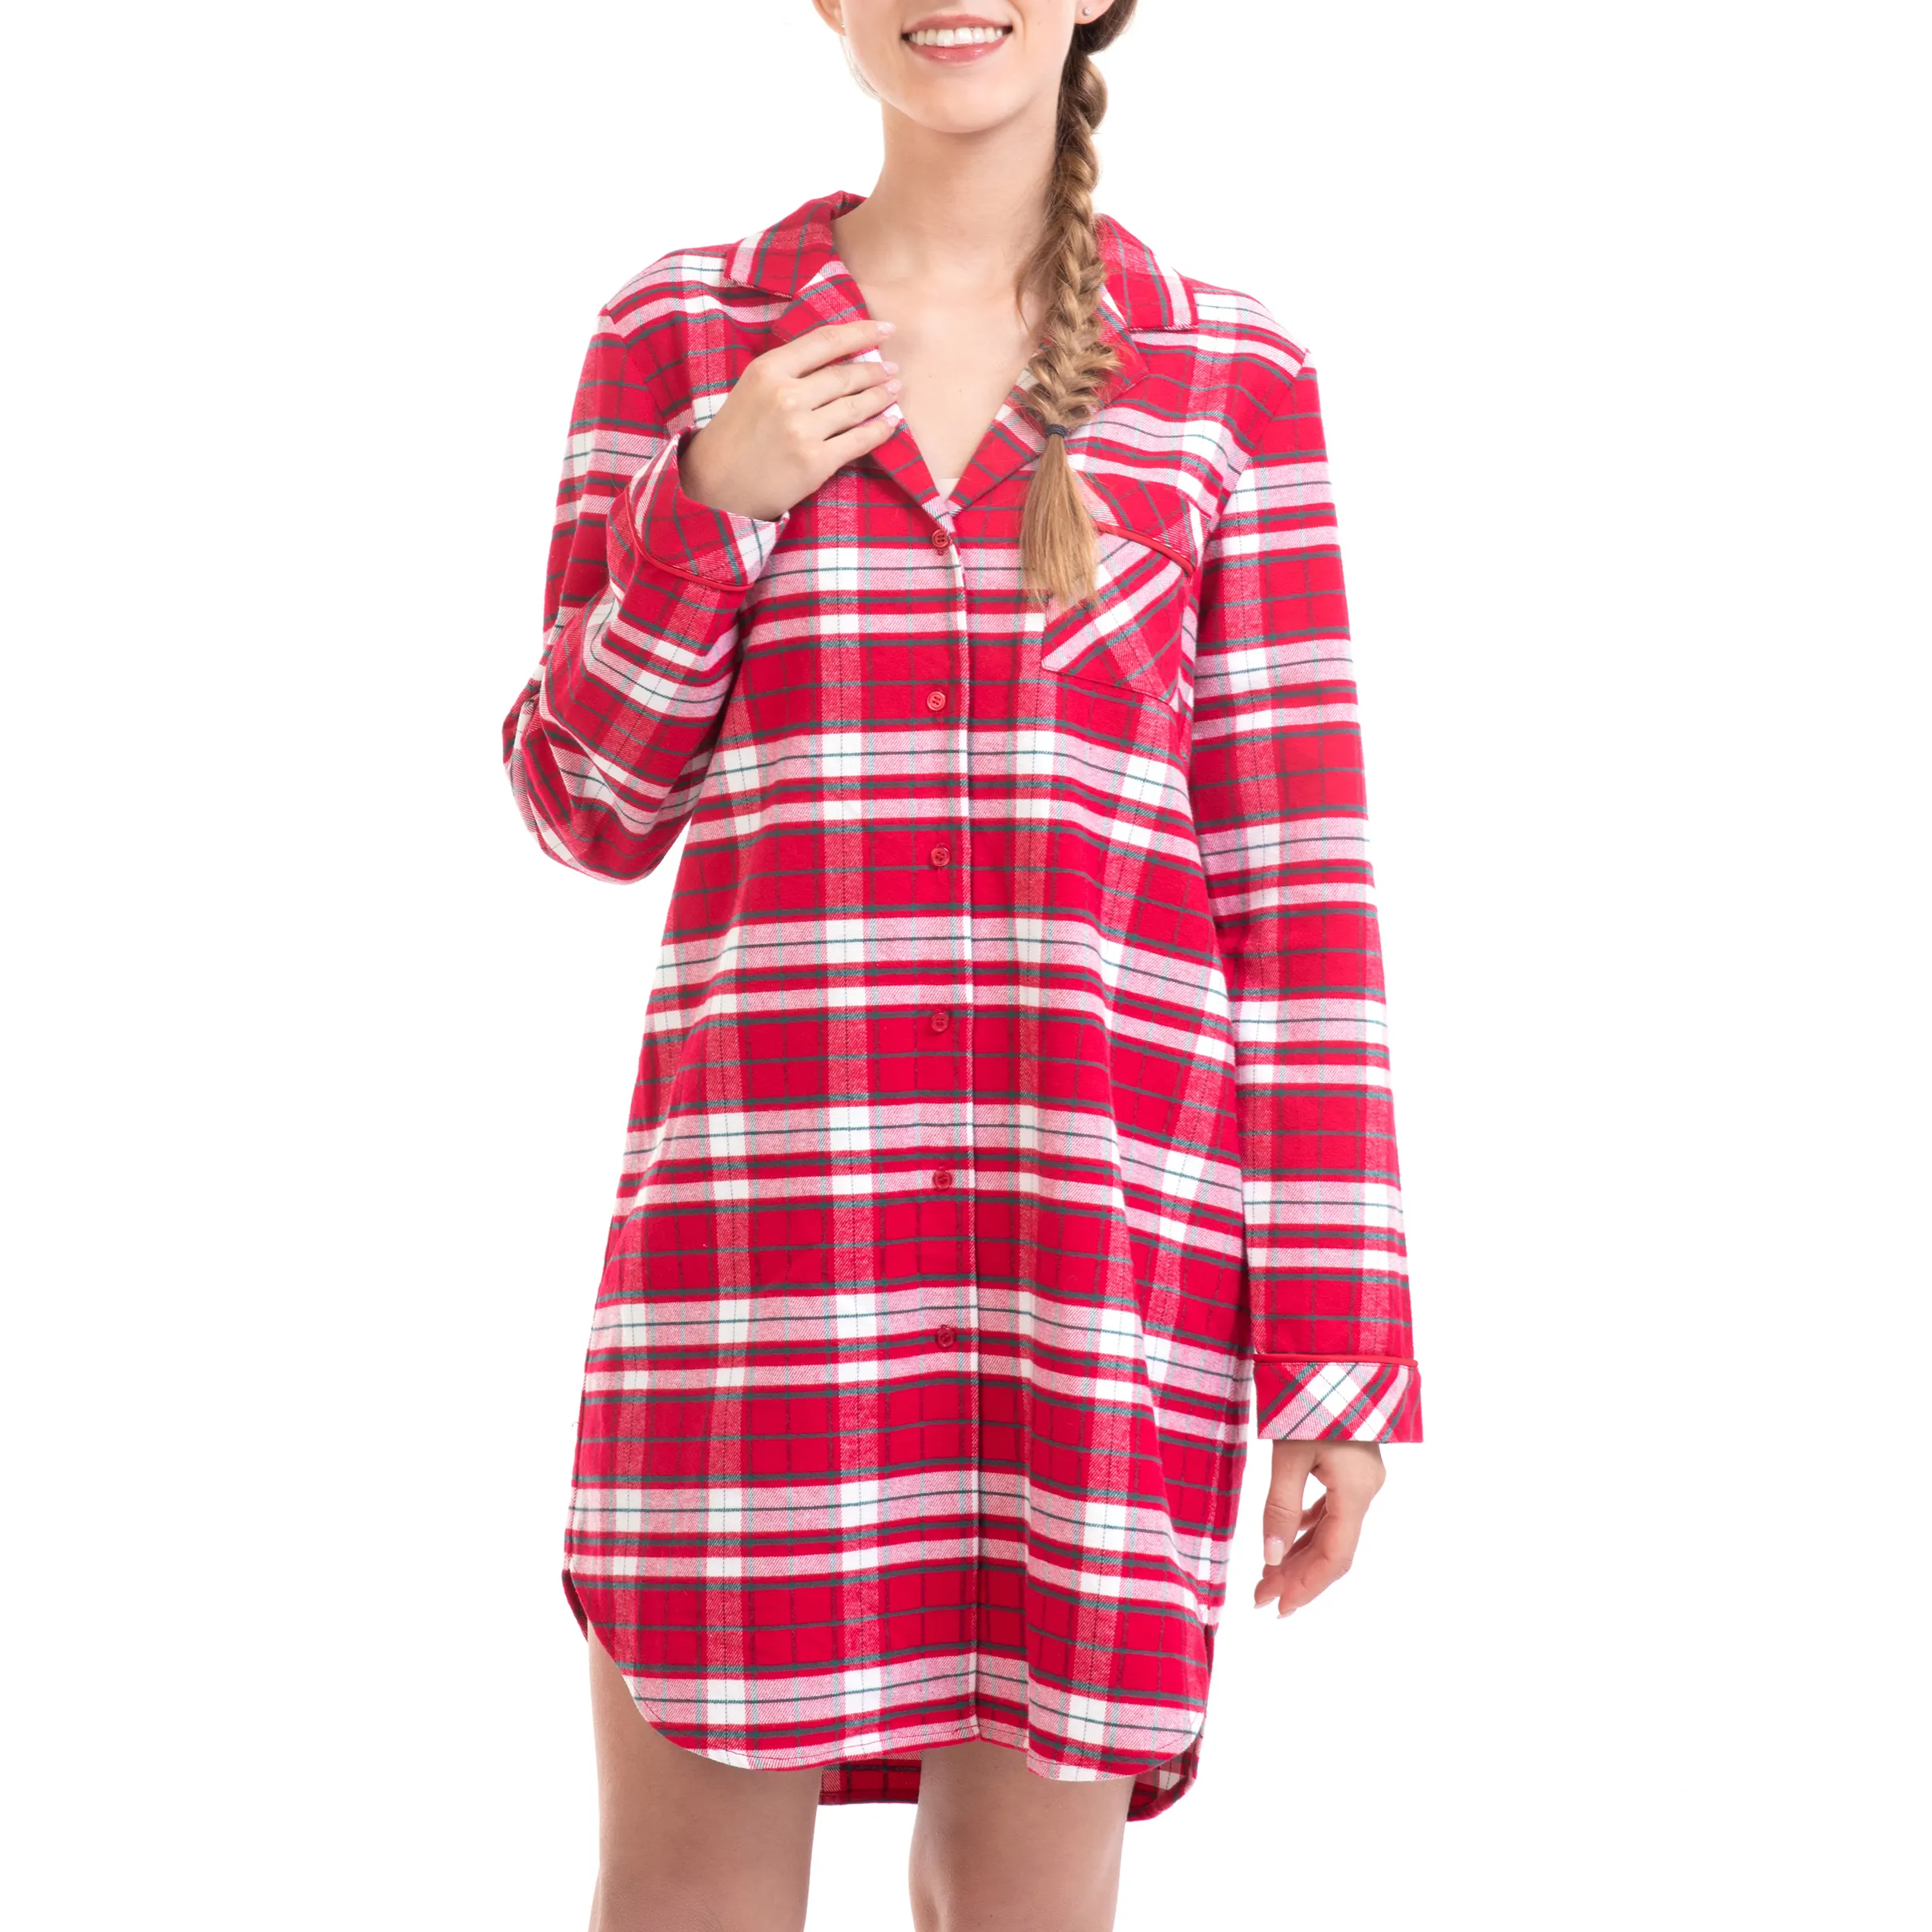 थोक यार्न रंगे नींद शर्ट फलालैन प्लेड पजामा कपास रात शर्ट महिलाओं के लिए